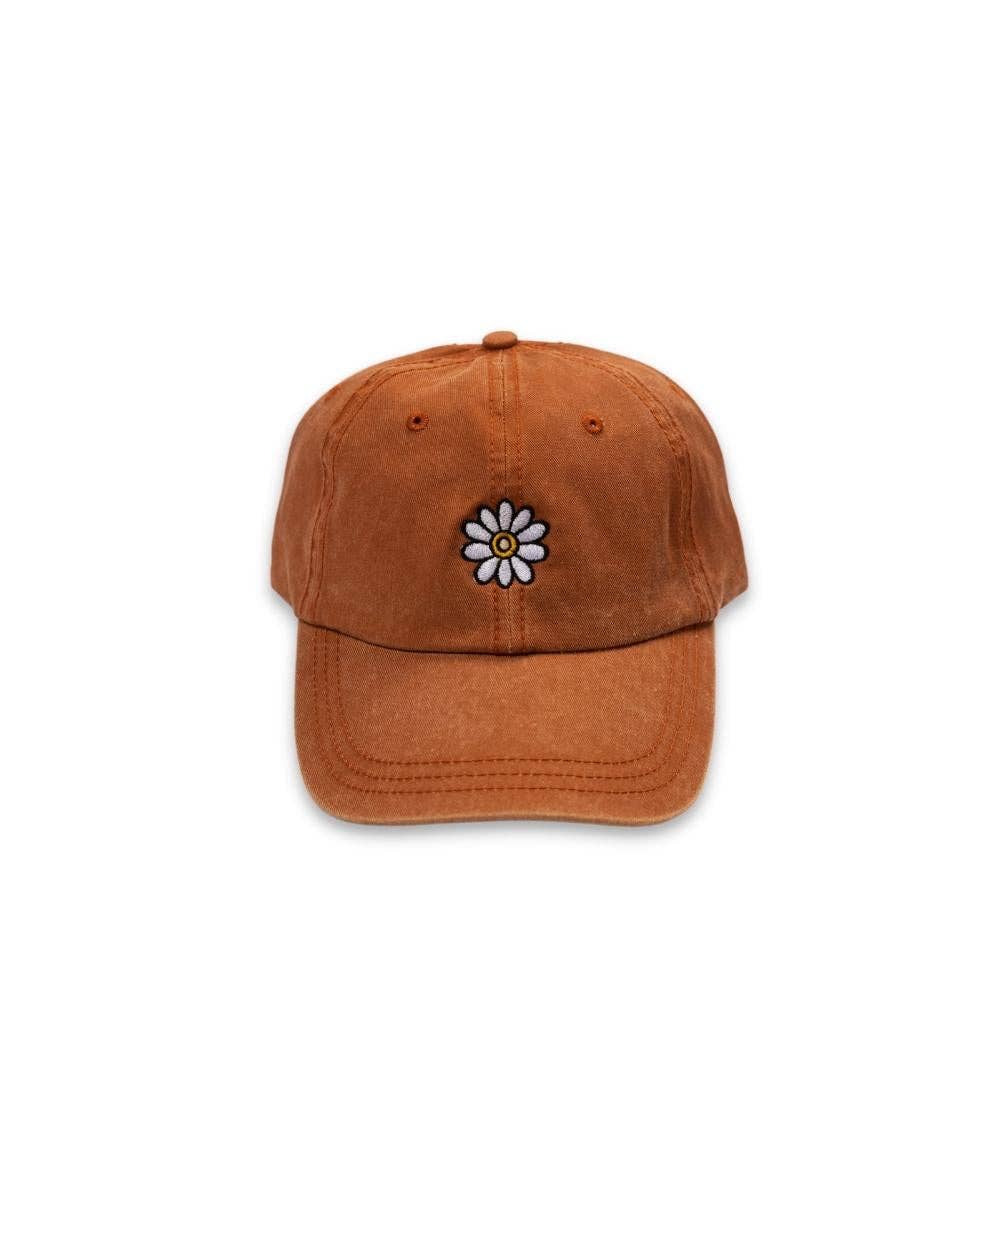 Bloom Dad Hat | Sunset Orange - Storm and Sky Shoppe - Keep Nature Wild